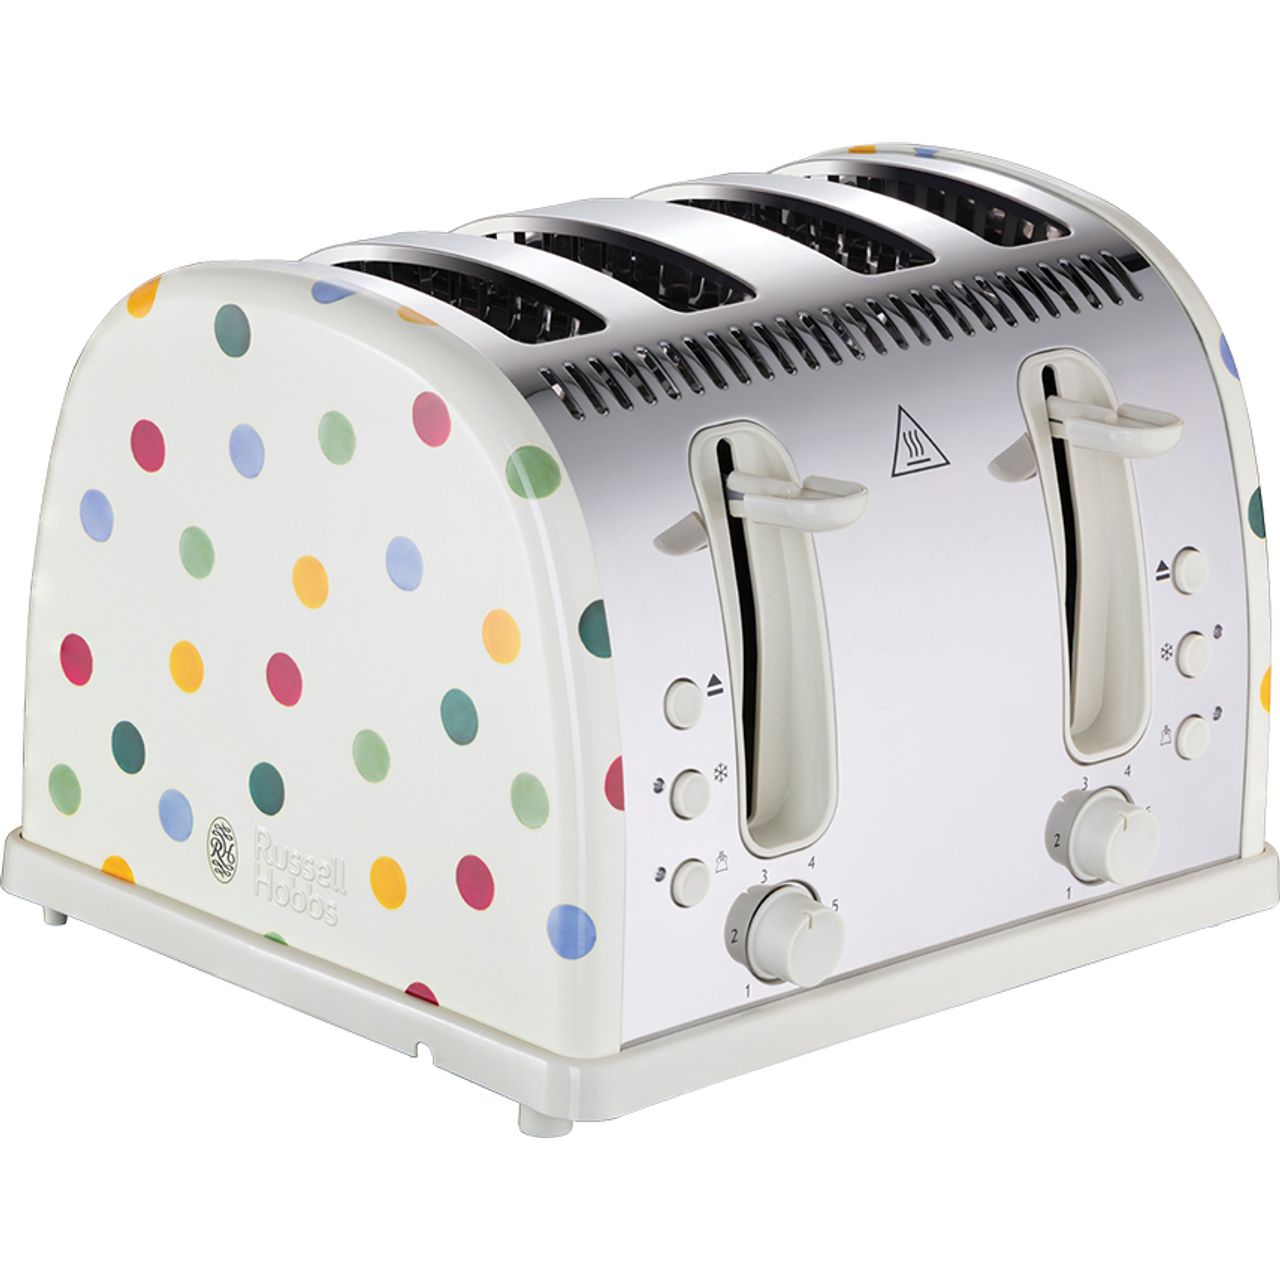 Russell Hobbs Emma Bridgewater Polka Dot Design 21305 4 Slice Toaster Review